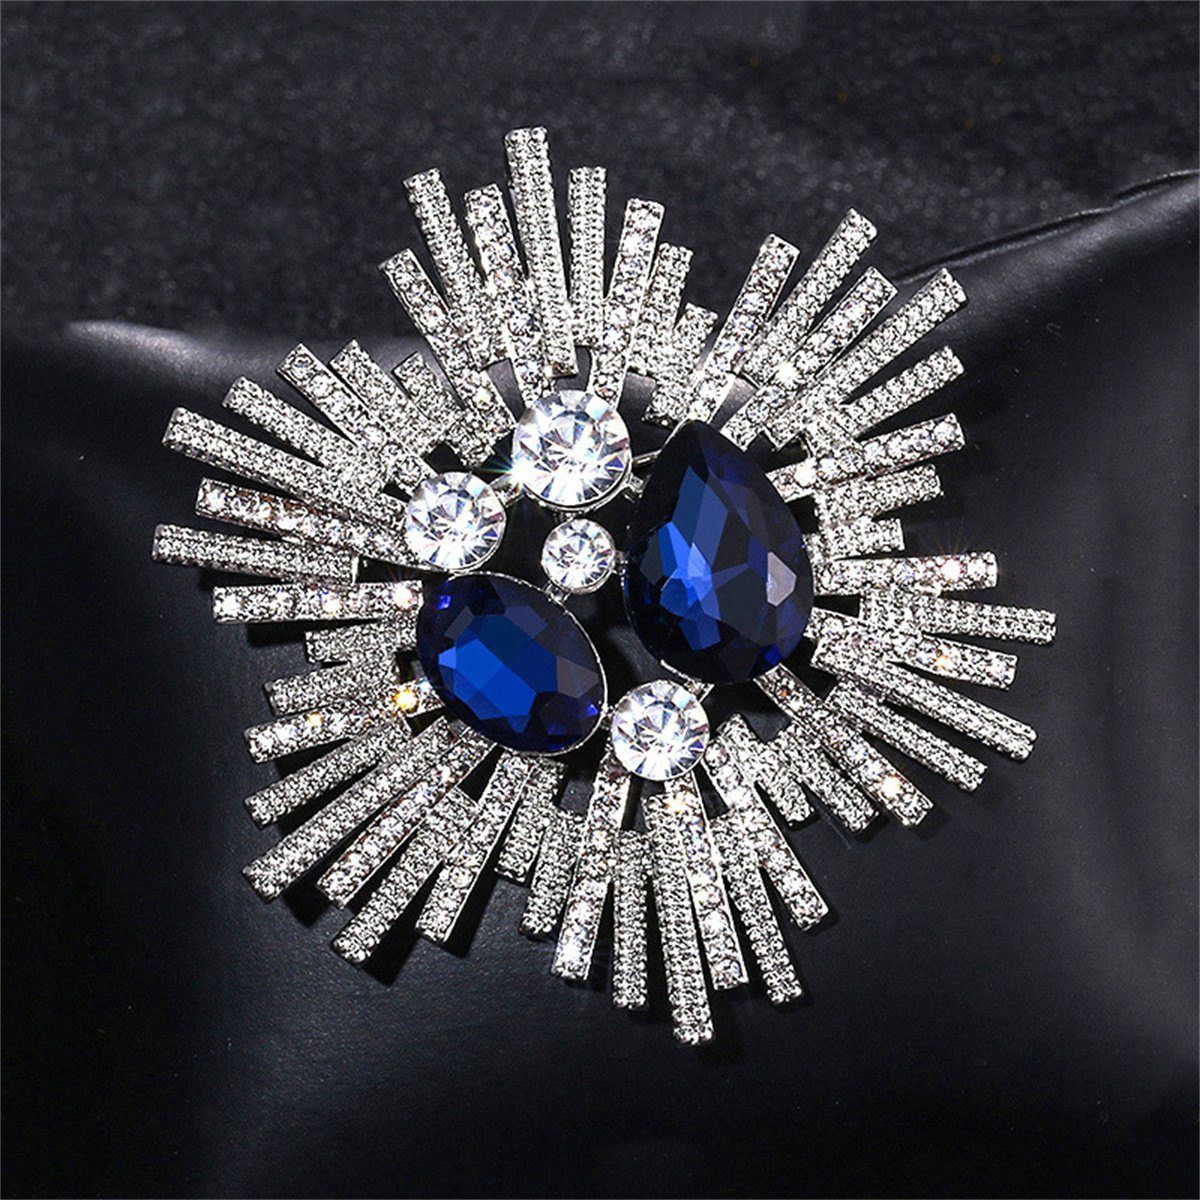 Zirkonia Exquisite in Vintage-Brosche Brosche mit Blau besetzt carefully Feuerwerksform, selected